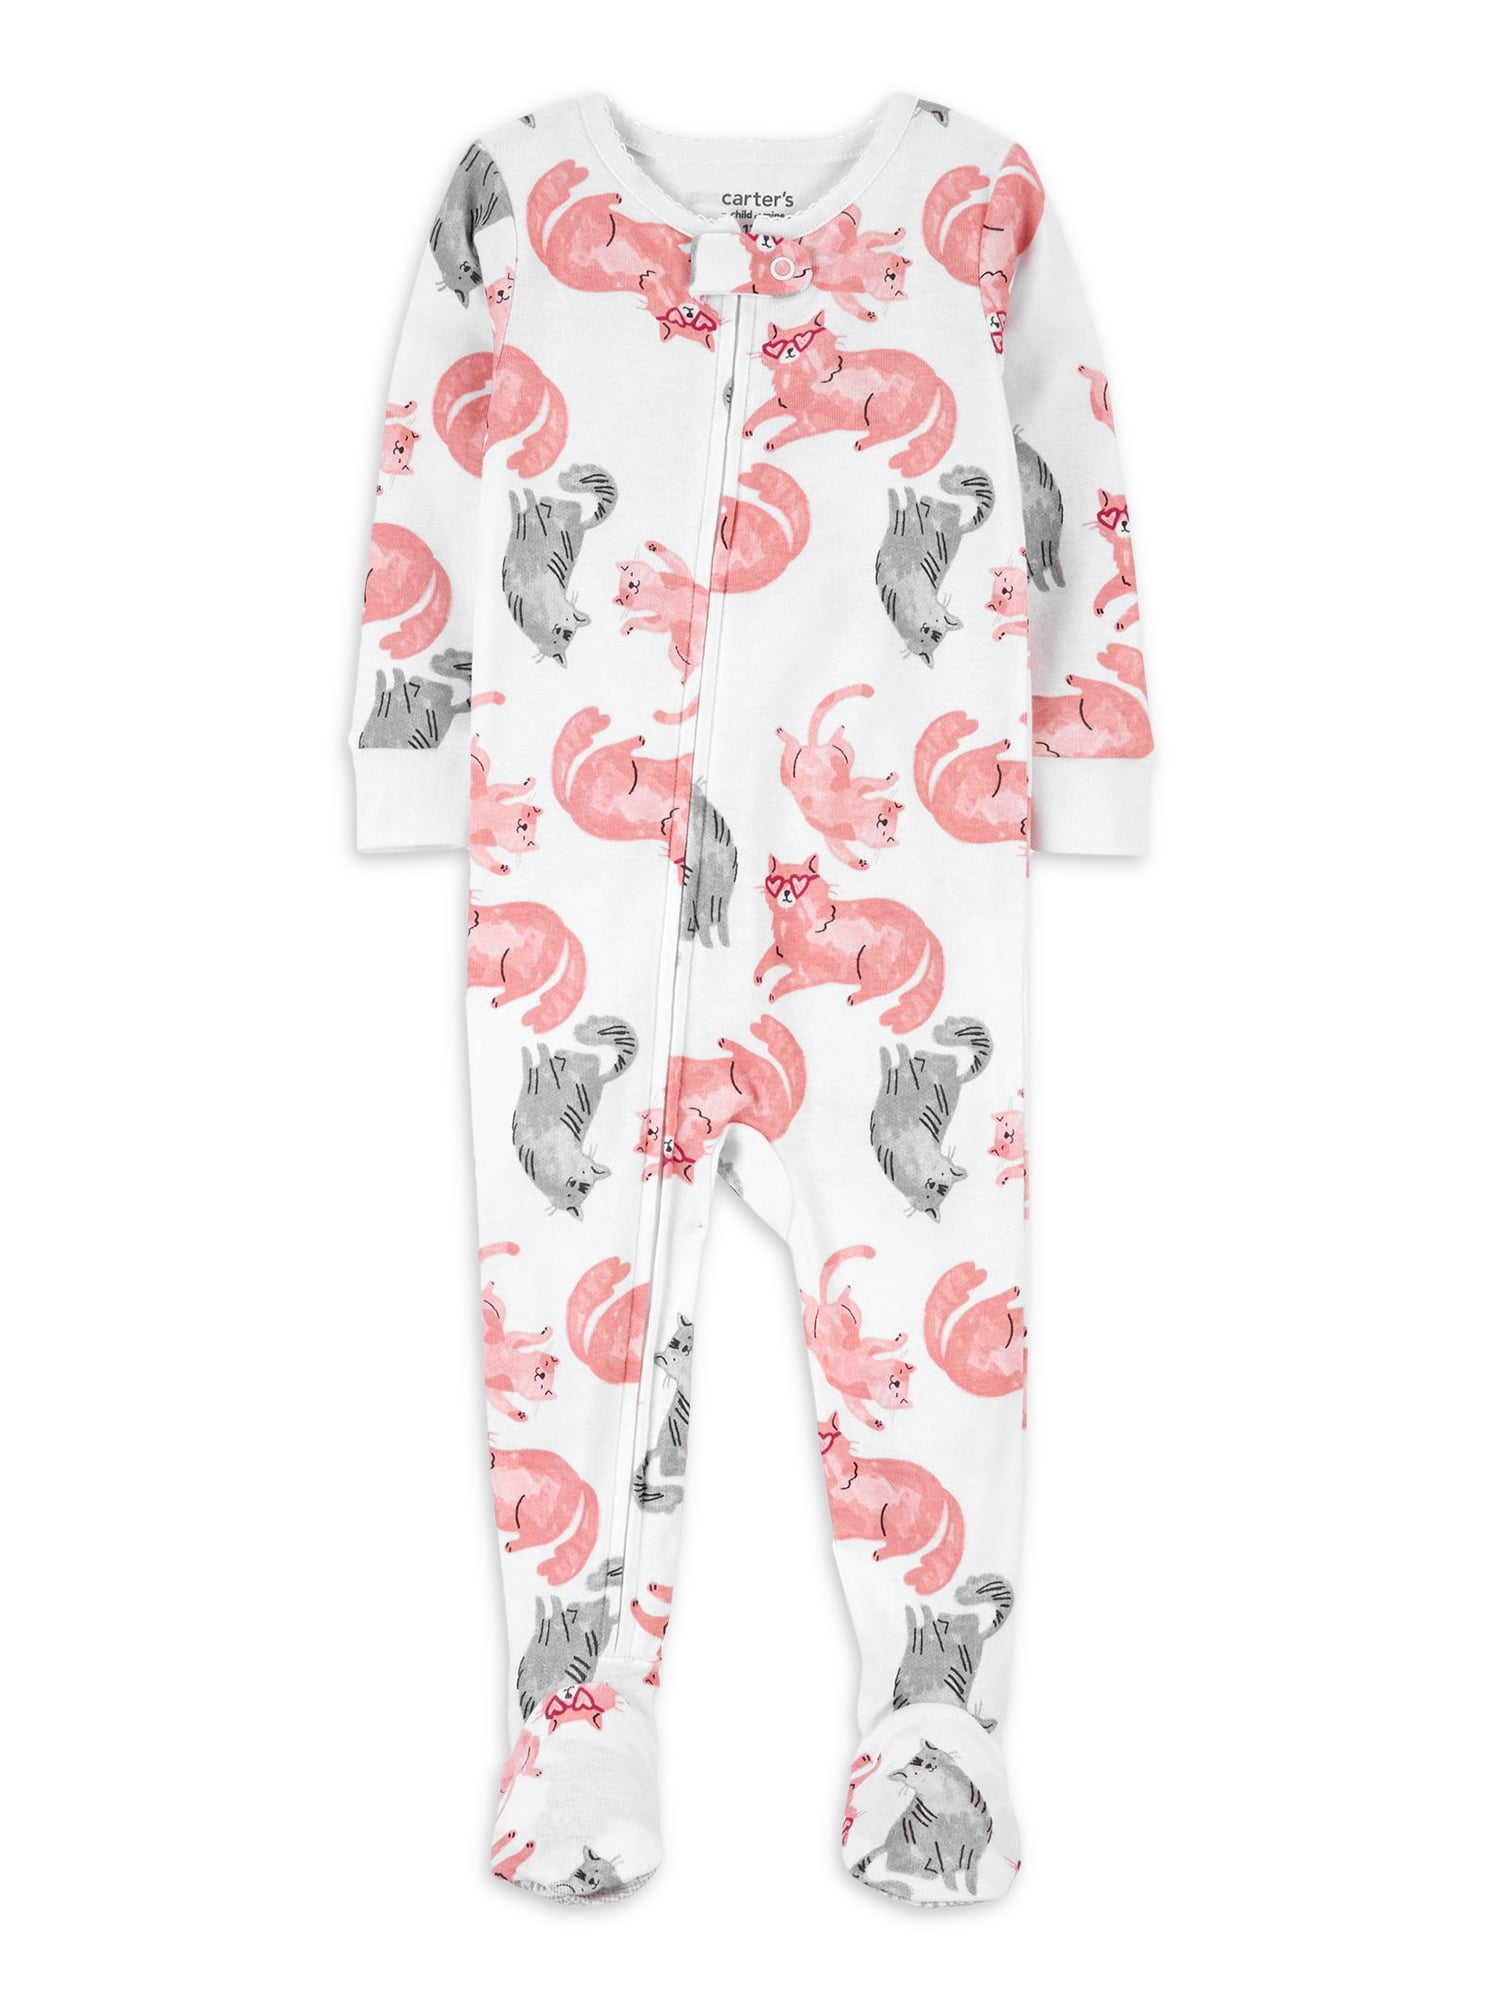 geweten cafe Weigeren Carter's Child of Mine Baby Girl One-Piece Pajama, 12-24M - Walmart.com